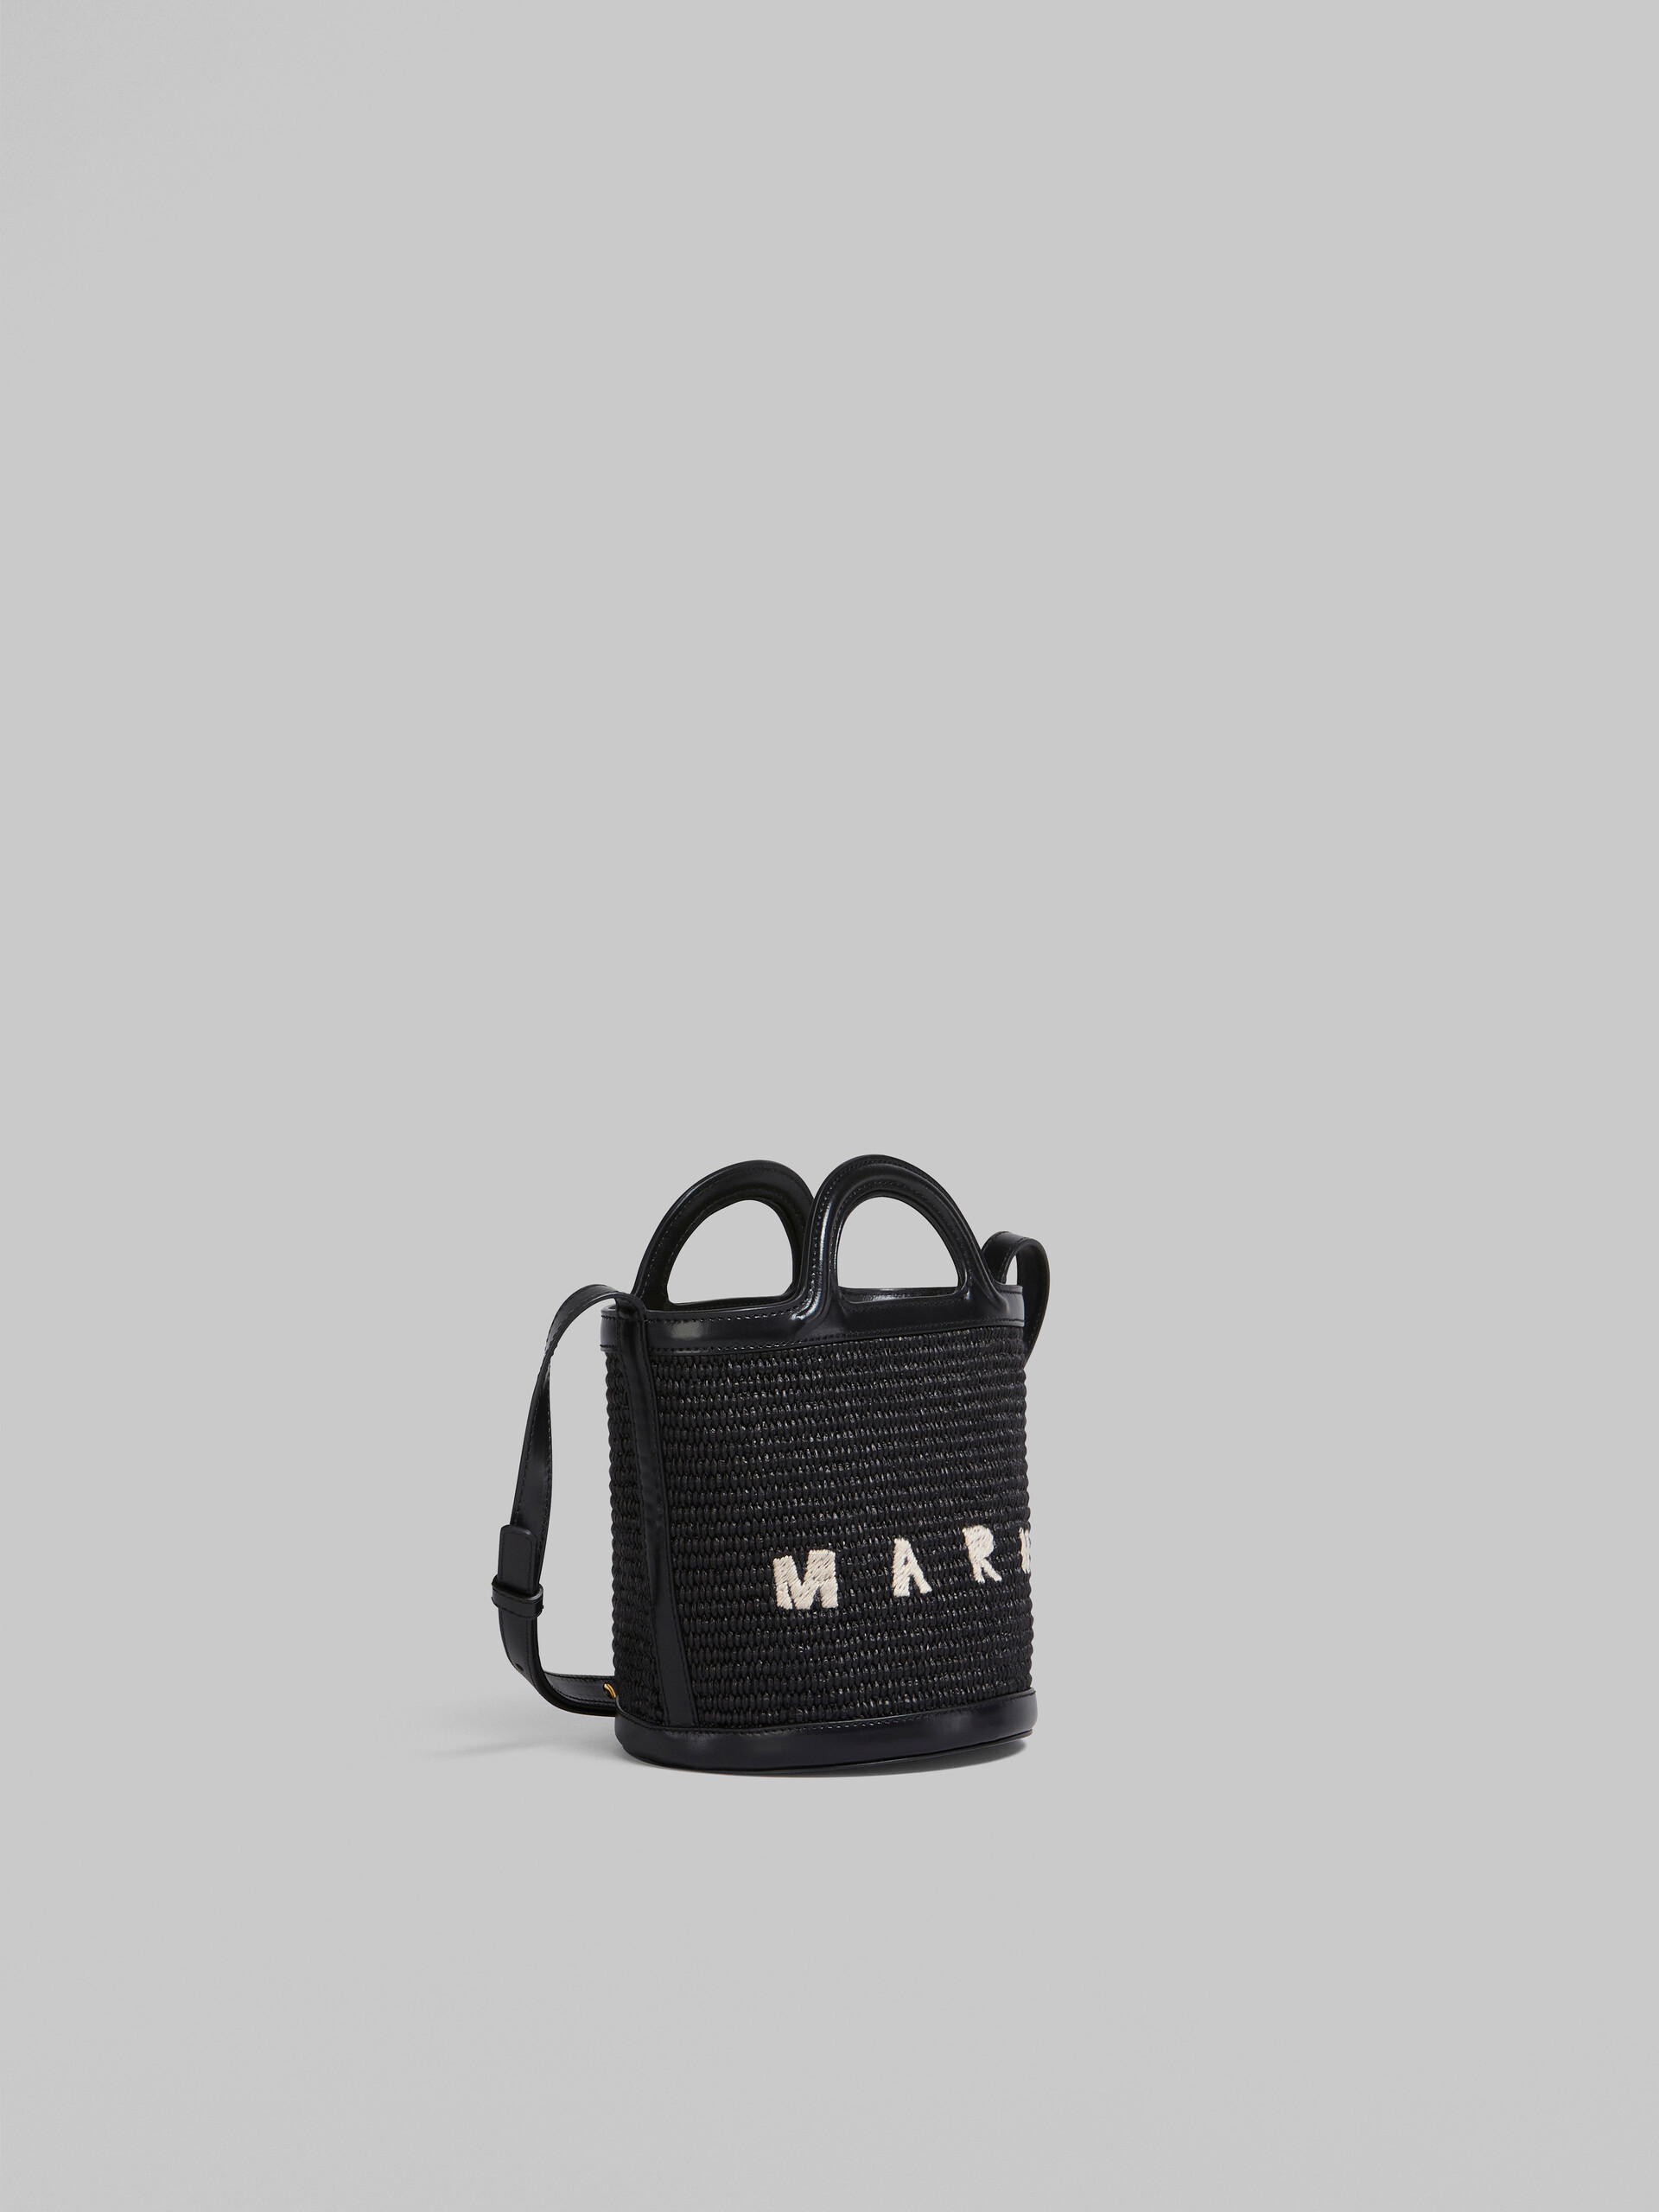 Tropicalia Small Bucket Bag in black leather and raffia - Shoulder Bag - Image 5